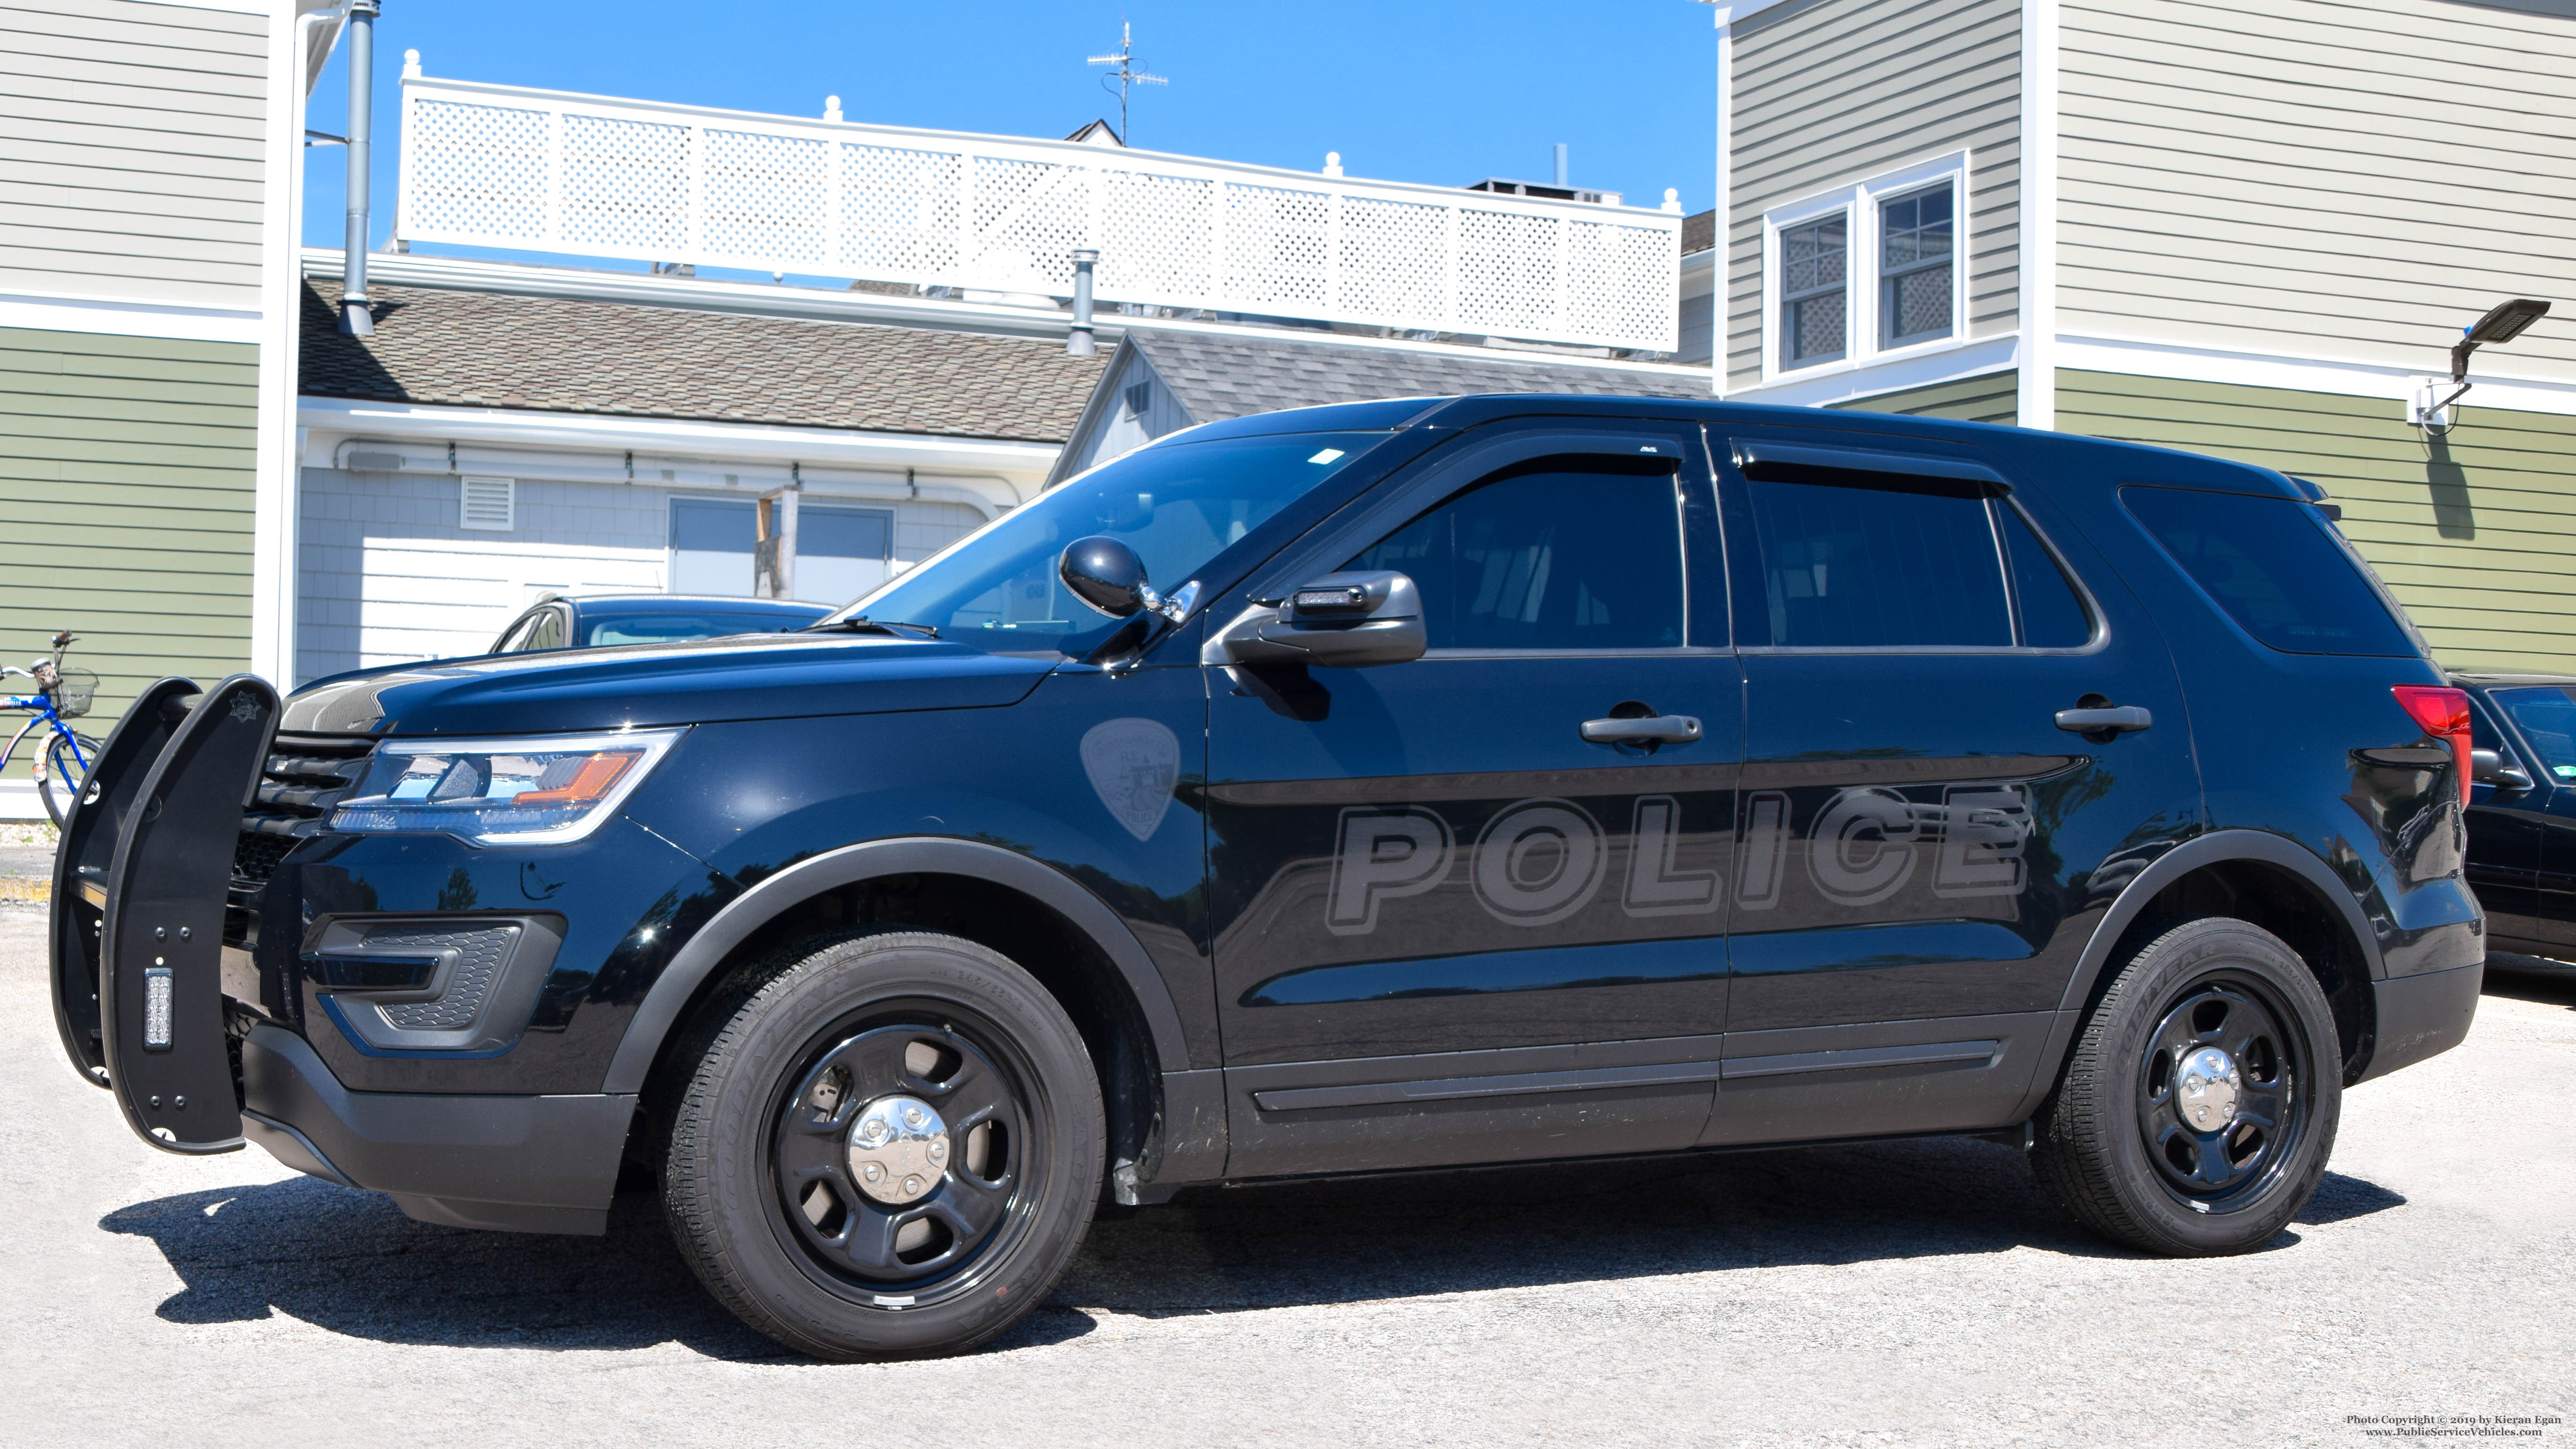 A photo  of Narragansett Police
            Car 31, a 2018 Ford Police Interceptor Utility             taken by Kieran Egan